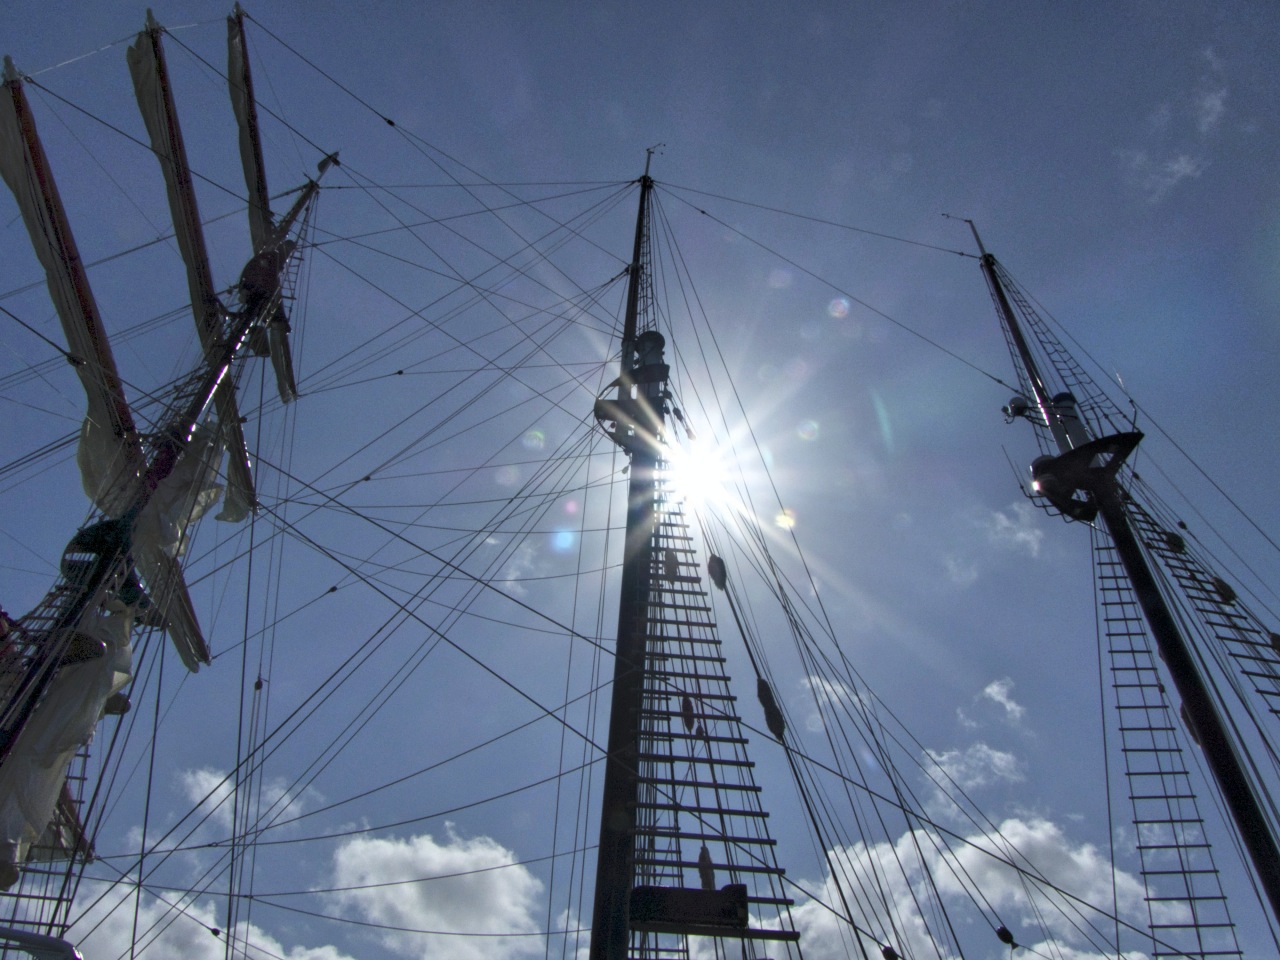 Russell Tall Ships Regatta